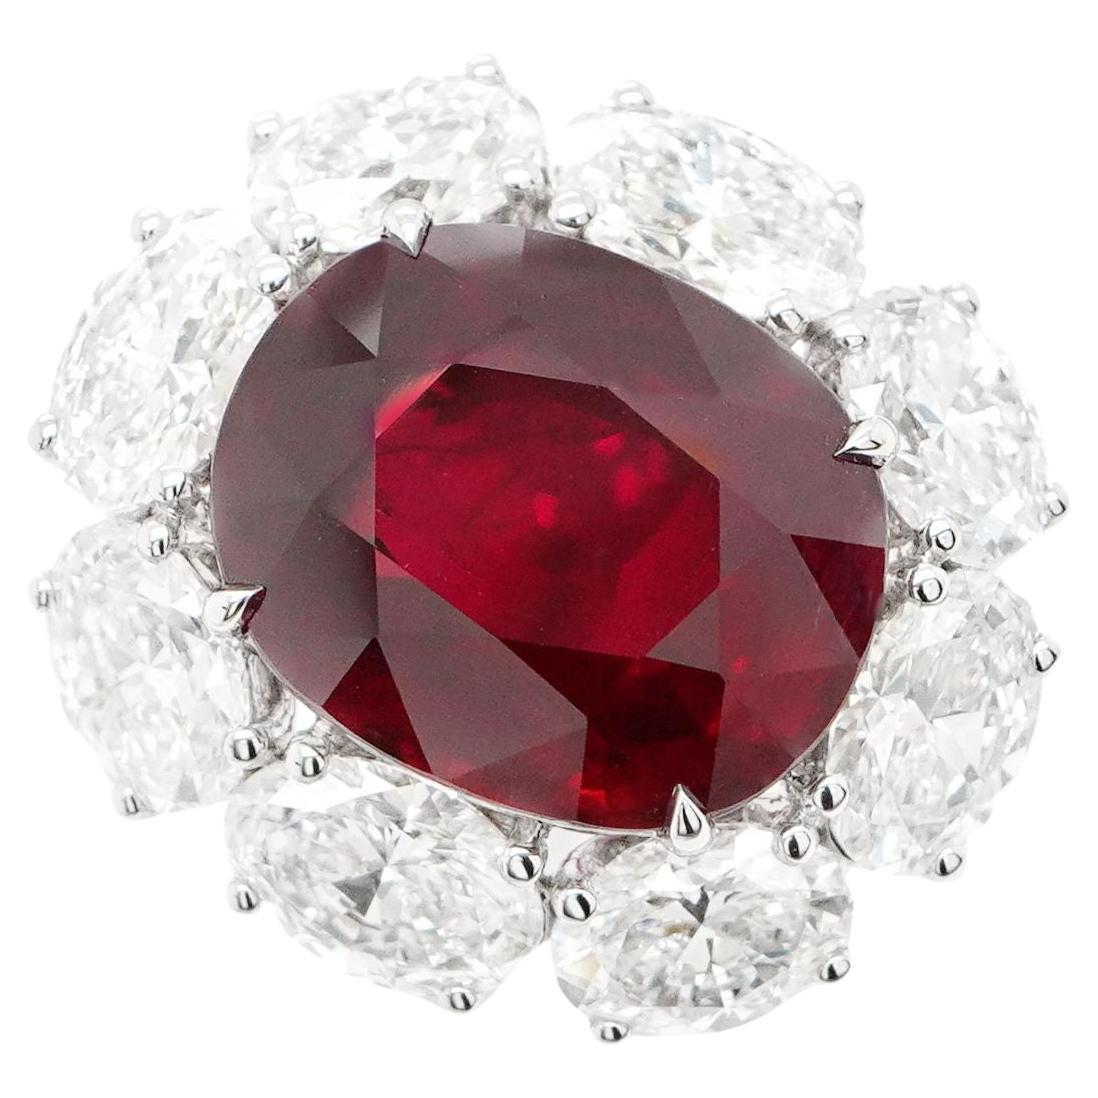 BENJAMIN FINE JEWELRY 9.09 cts Ruby with Diamond 18K Ring